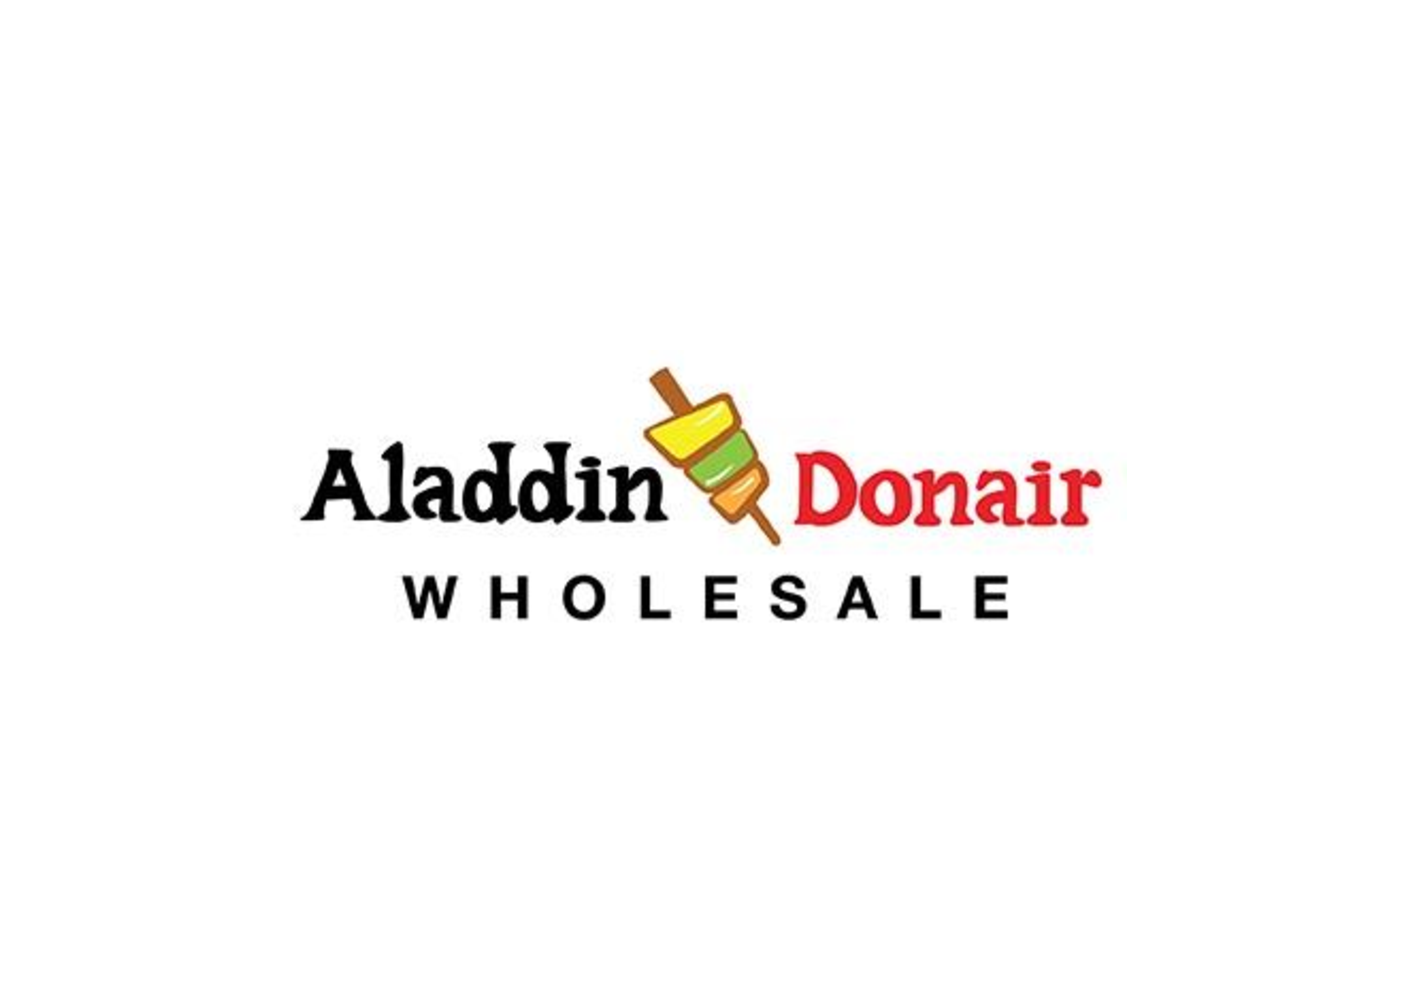 Alladin-Donairs